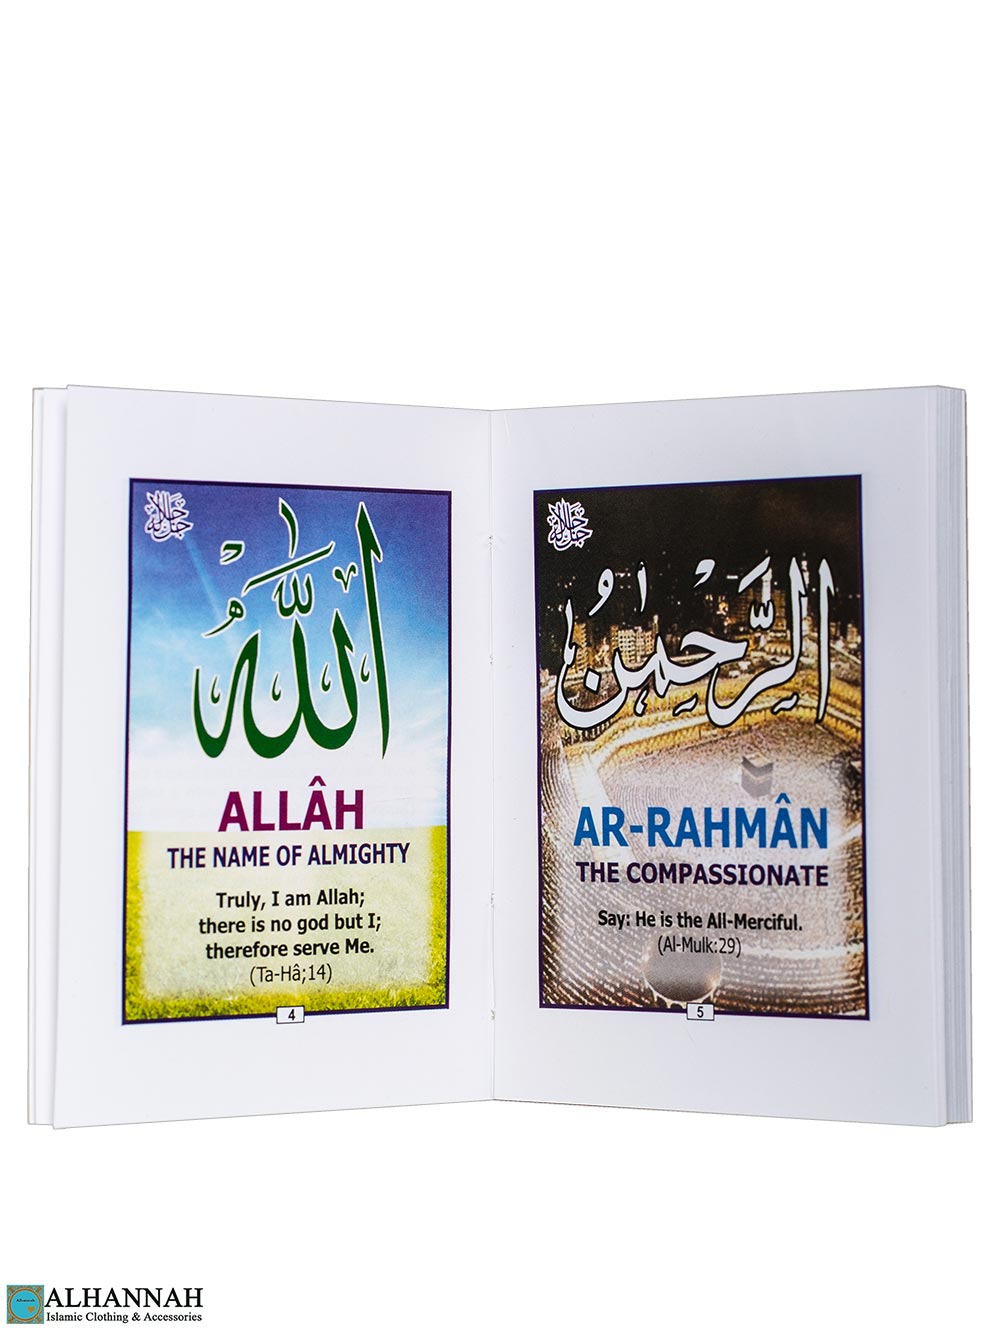 99 Names of Allah tracing Book